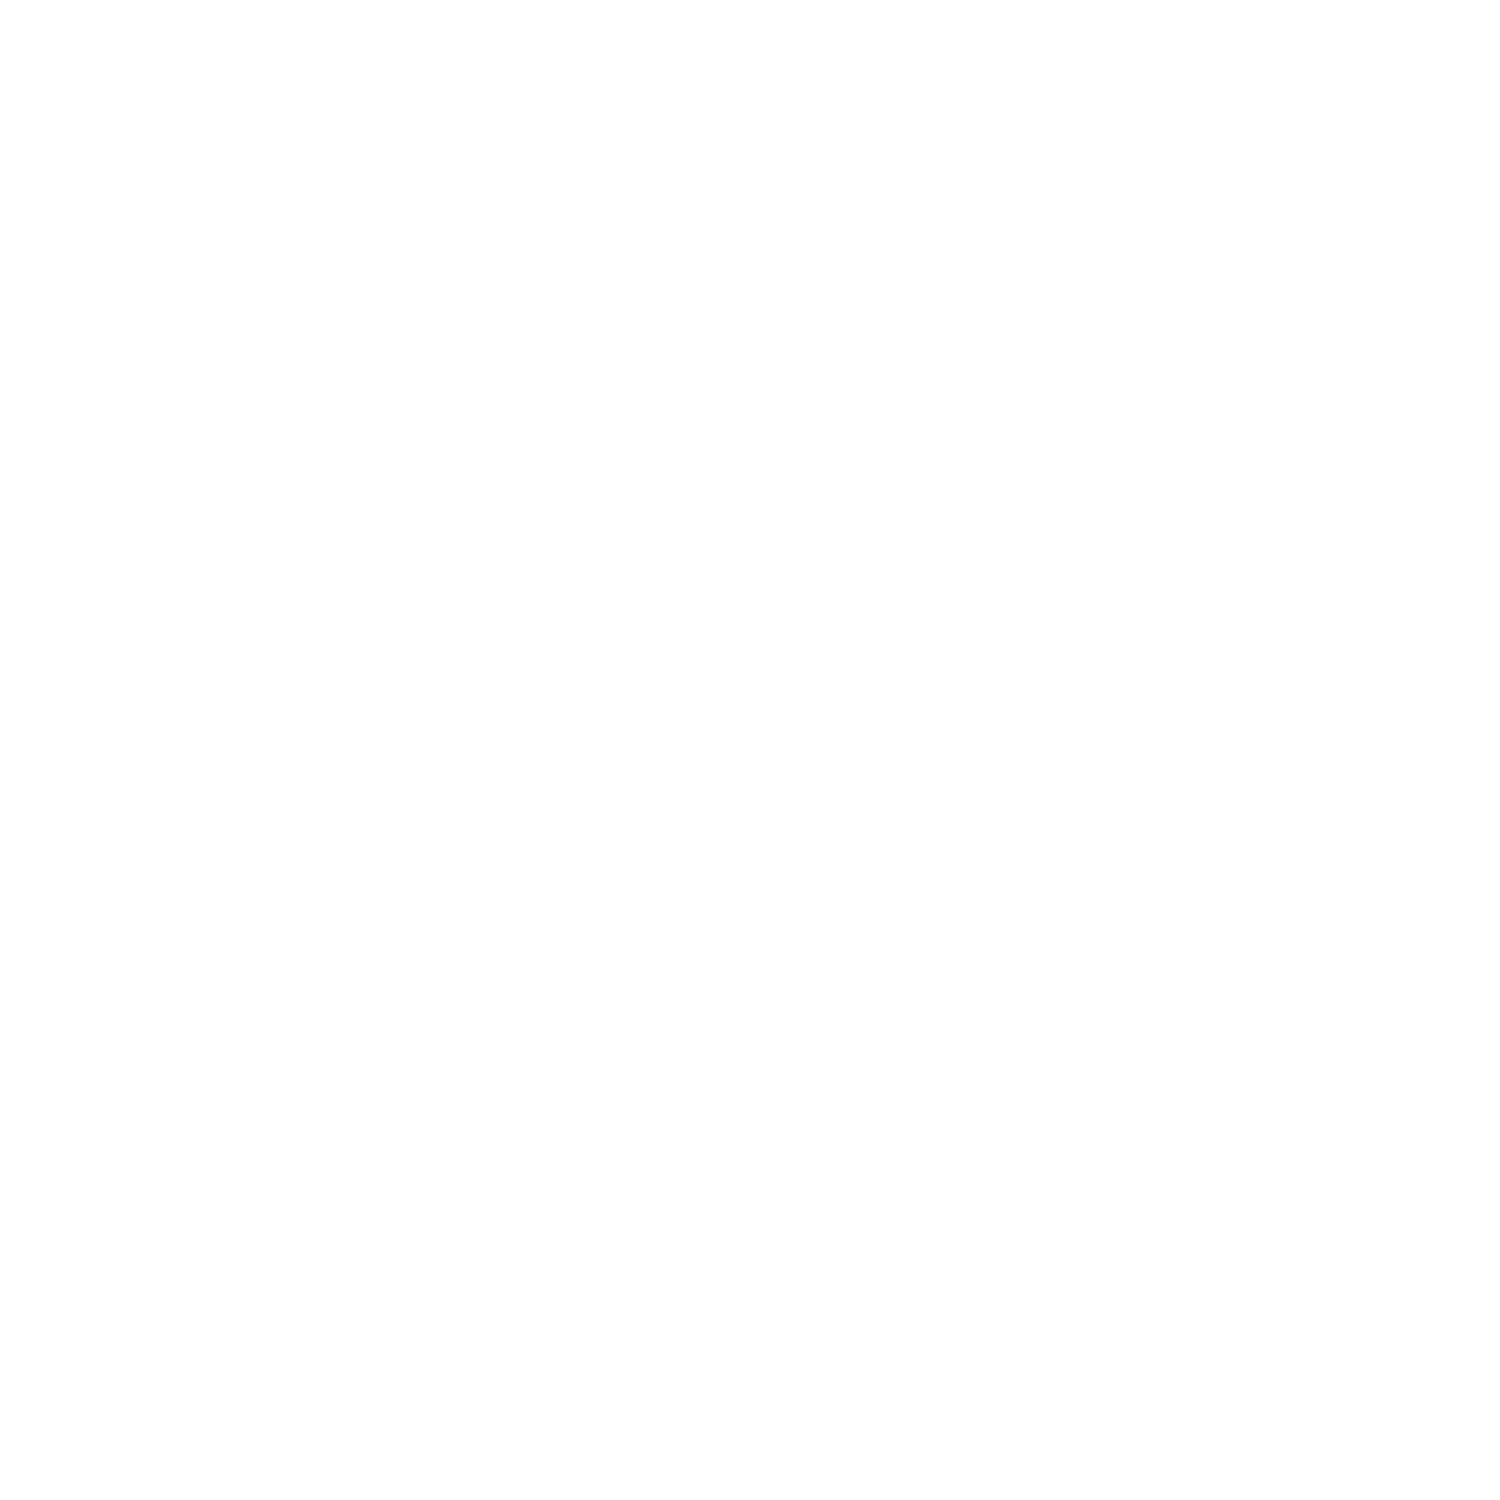 RELIGHT creative